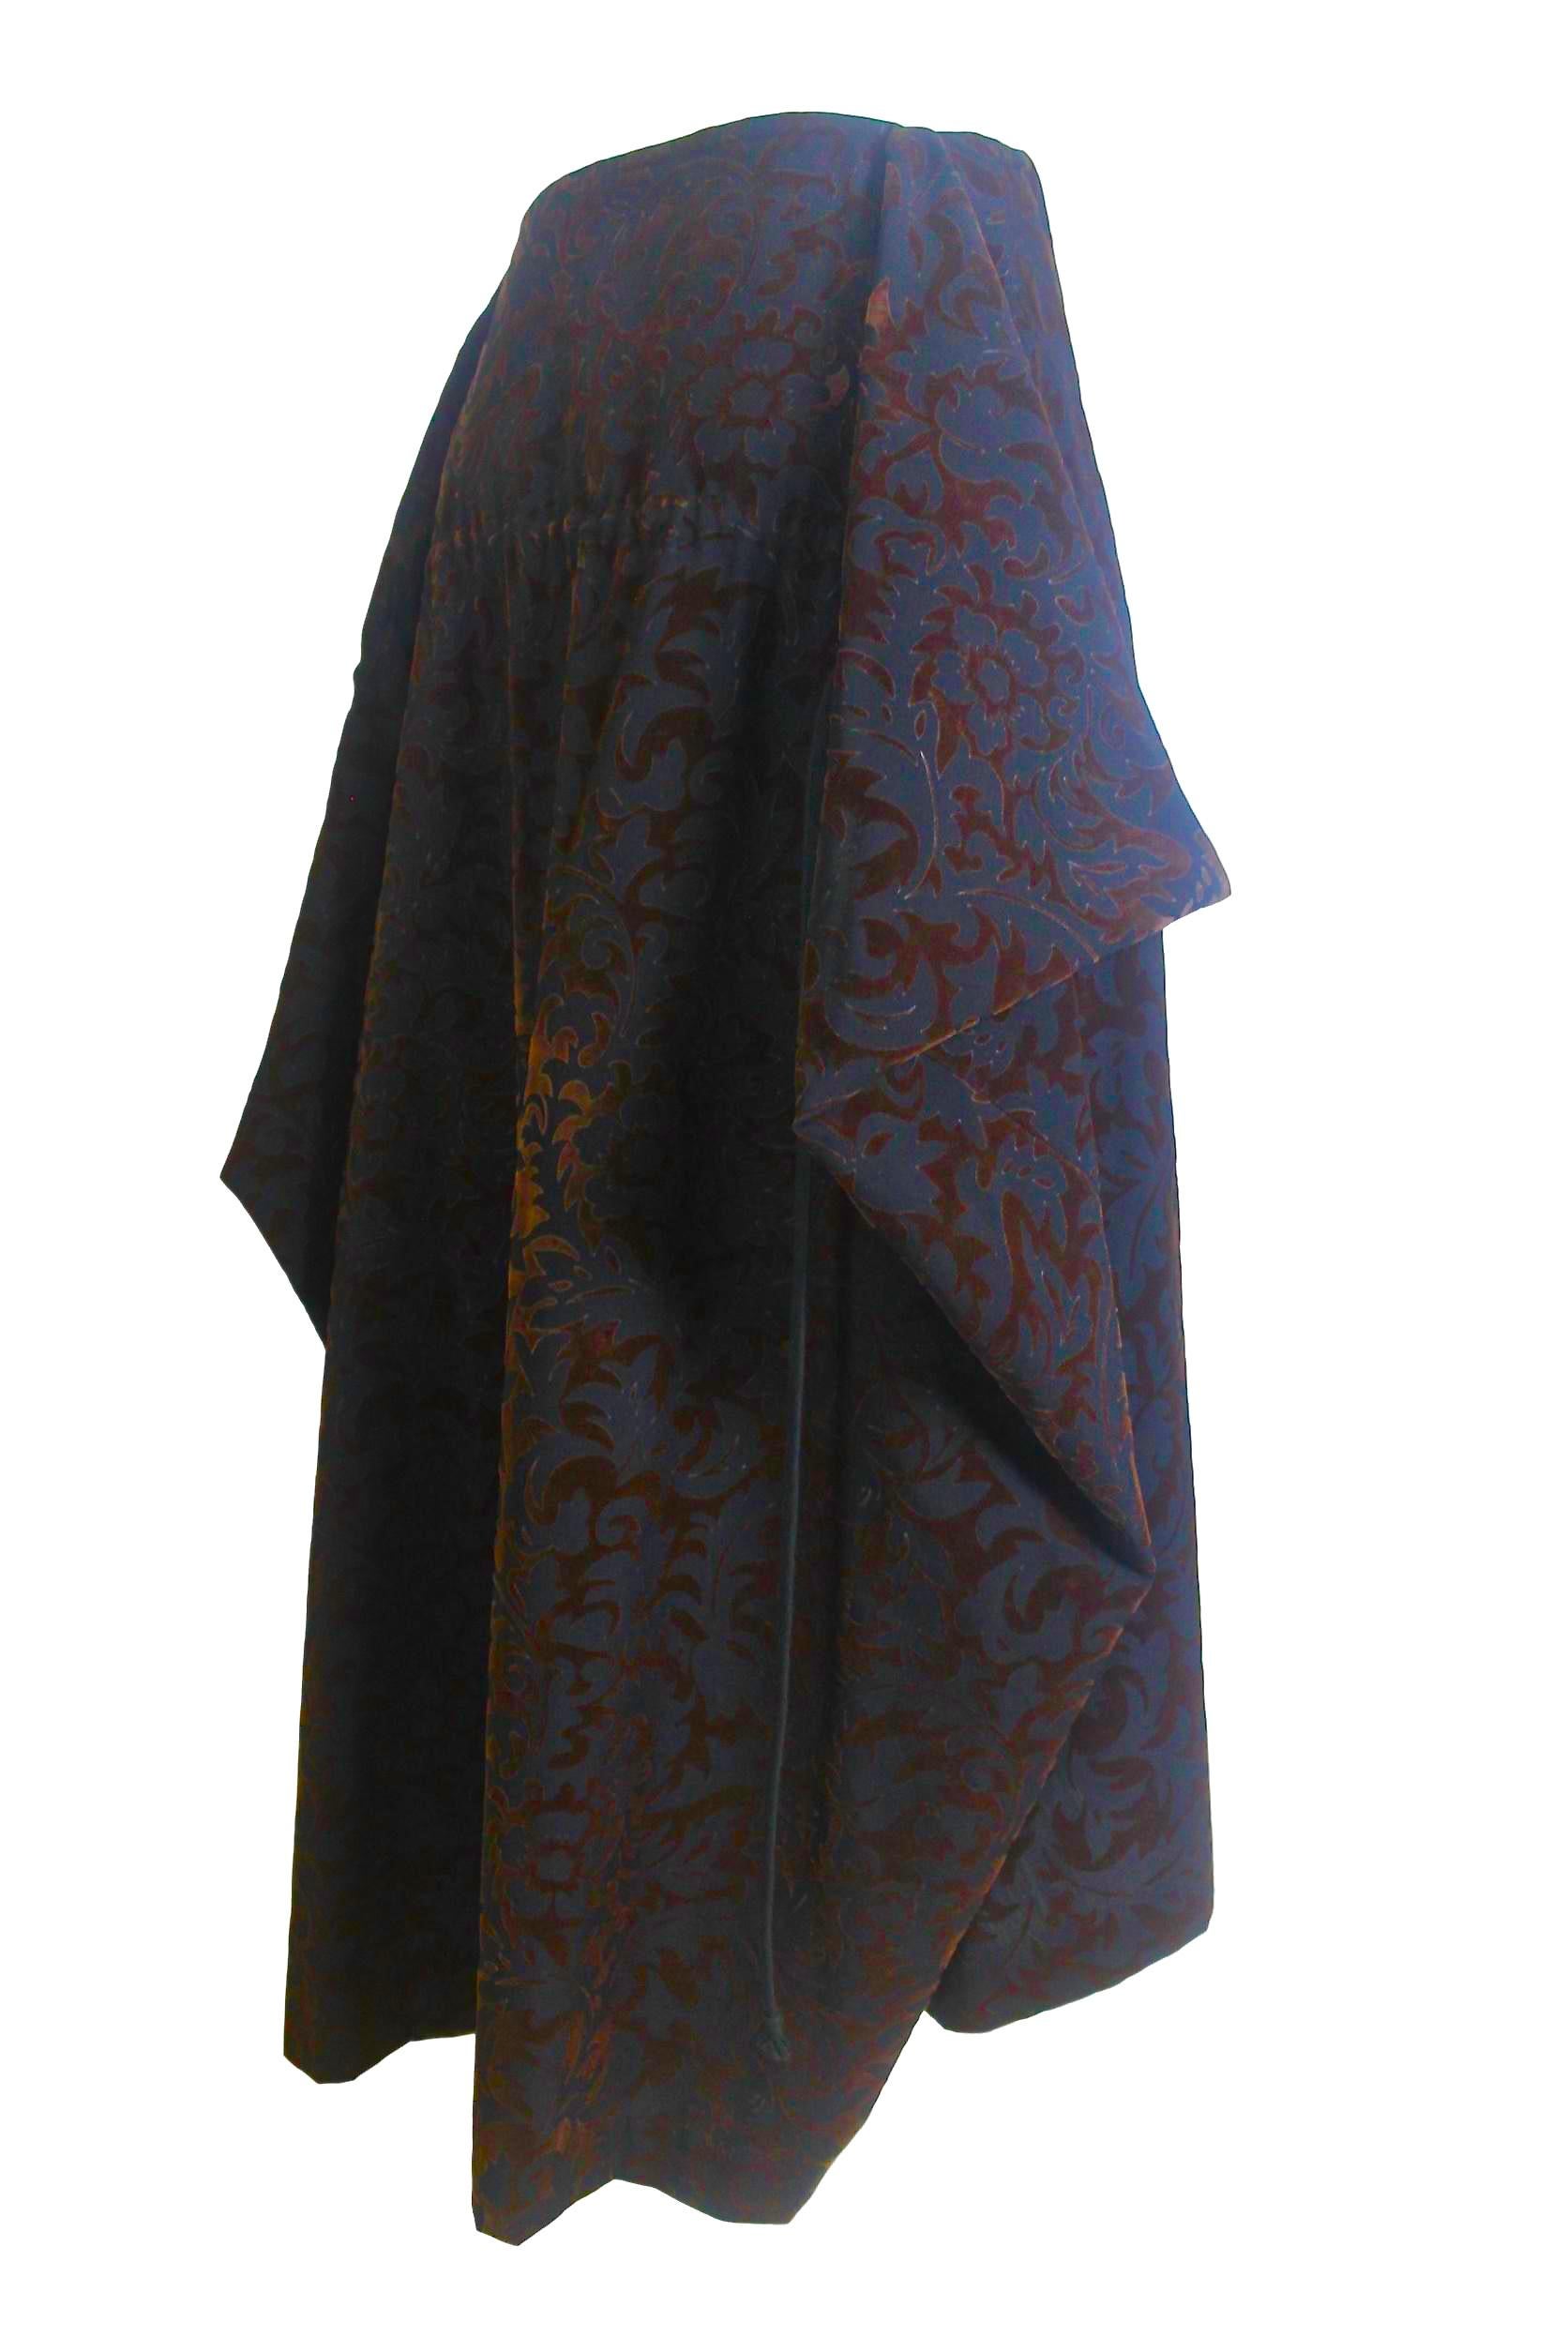 Comme des Garcons Flat Envelope Wool Skirt AD 1996 For Sale 2